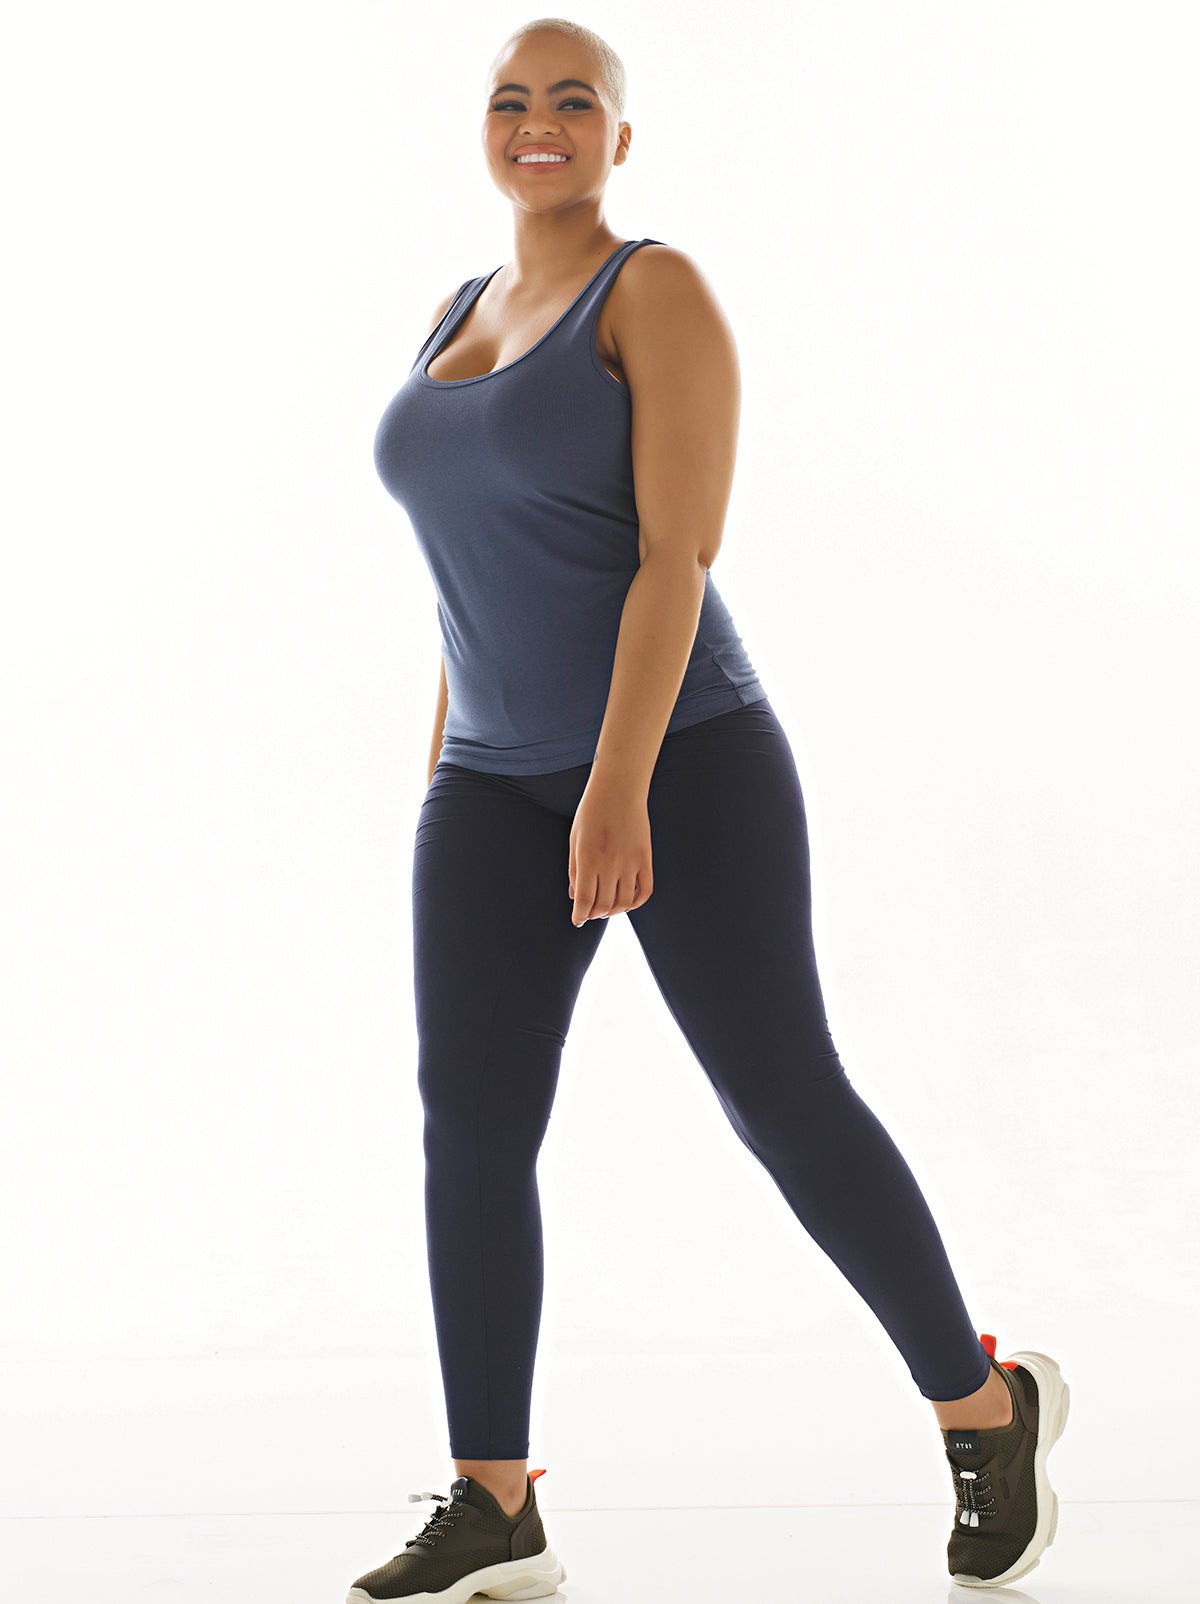 Felina Velvety Super Soft Lightweight Leggings 2-Pack - For Women - Yoga  Pants, Workout Clothes (Wine Hunter Green, X-Small) 